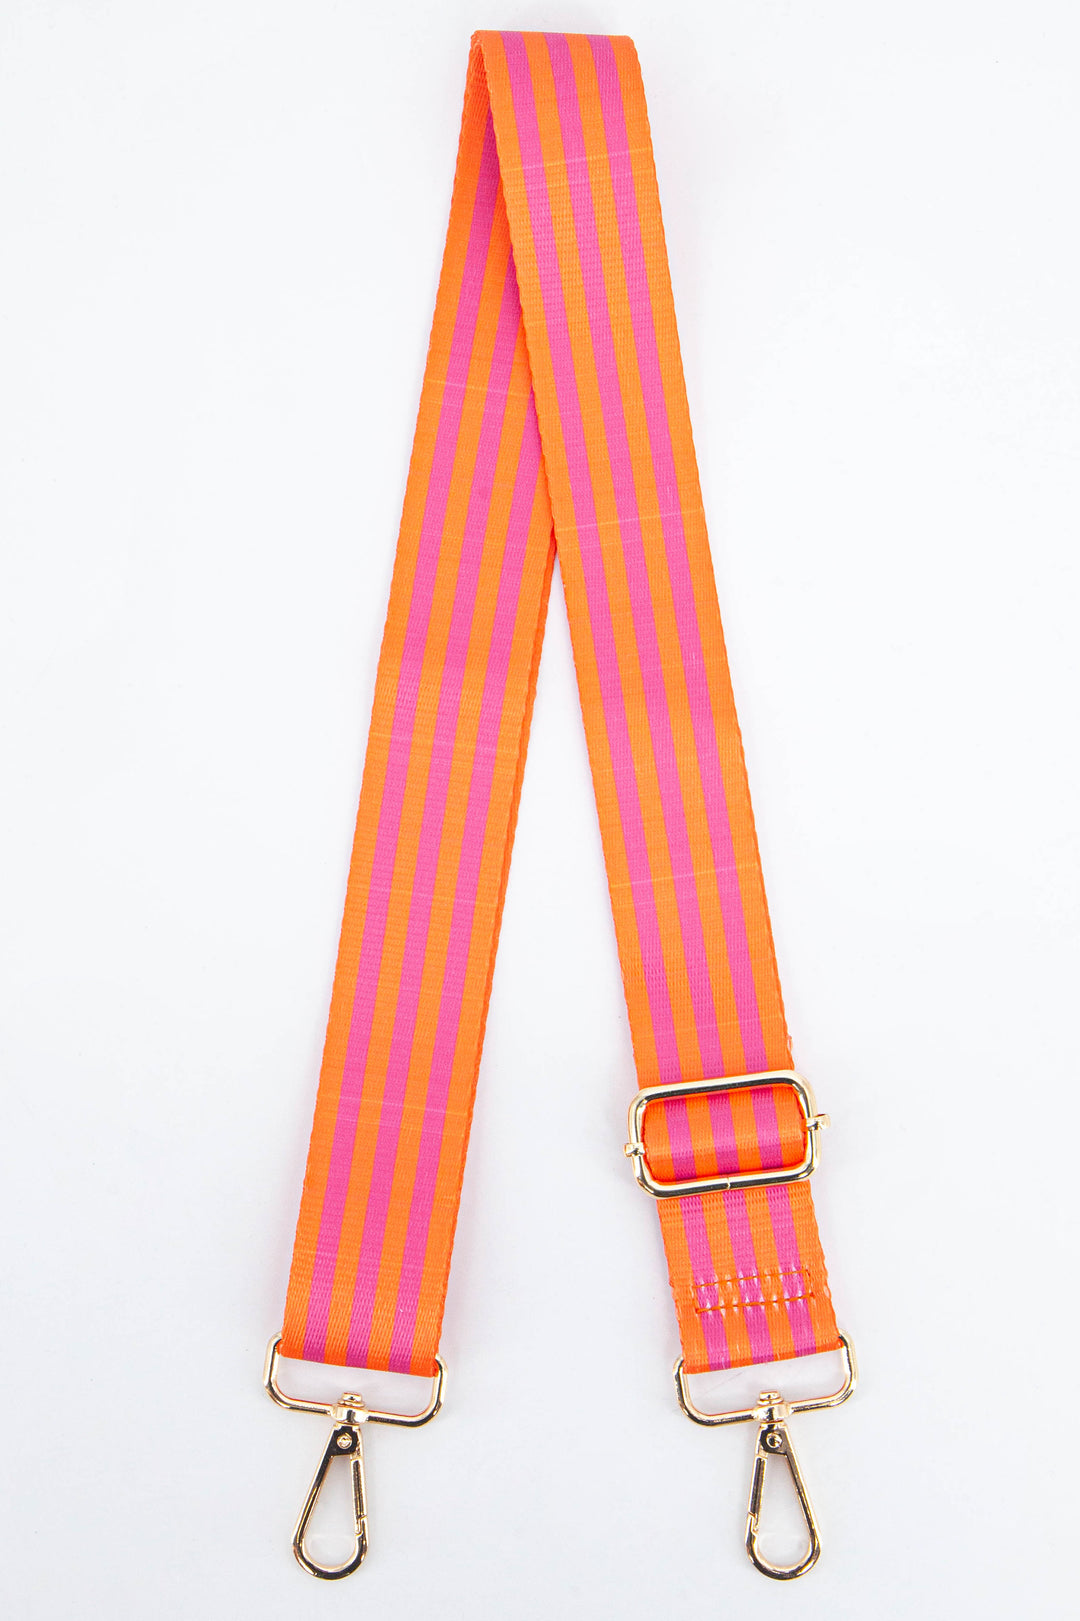 hot pink and orange alternating stripe bag strap with gold clip on hardware